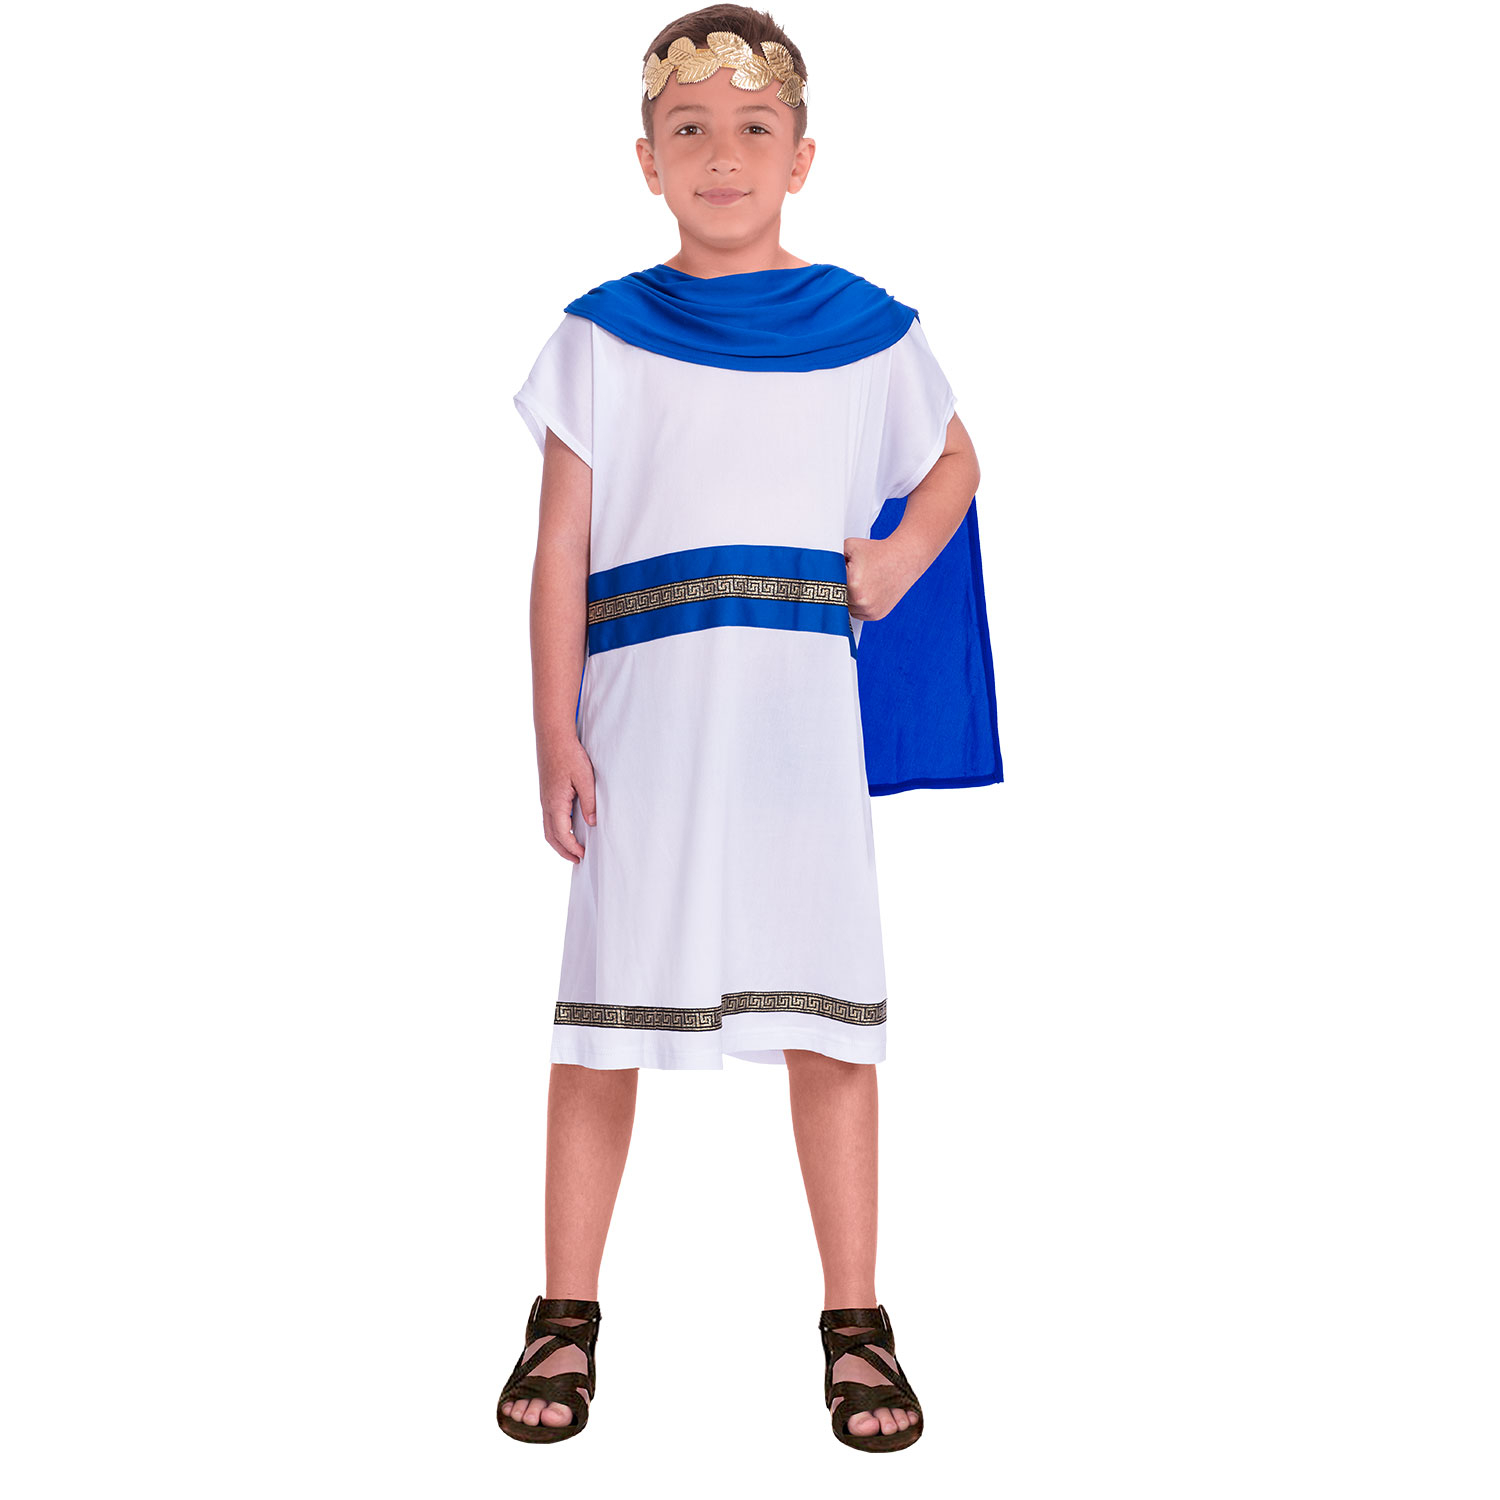 Caesar Blue Costume - Age 10-12 Years - 1 PC : Amscan International